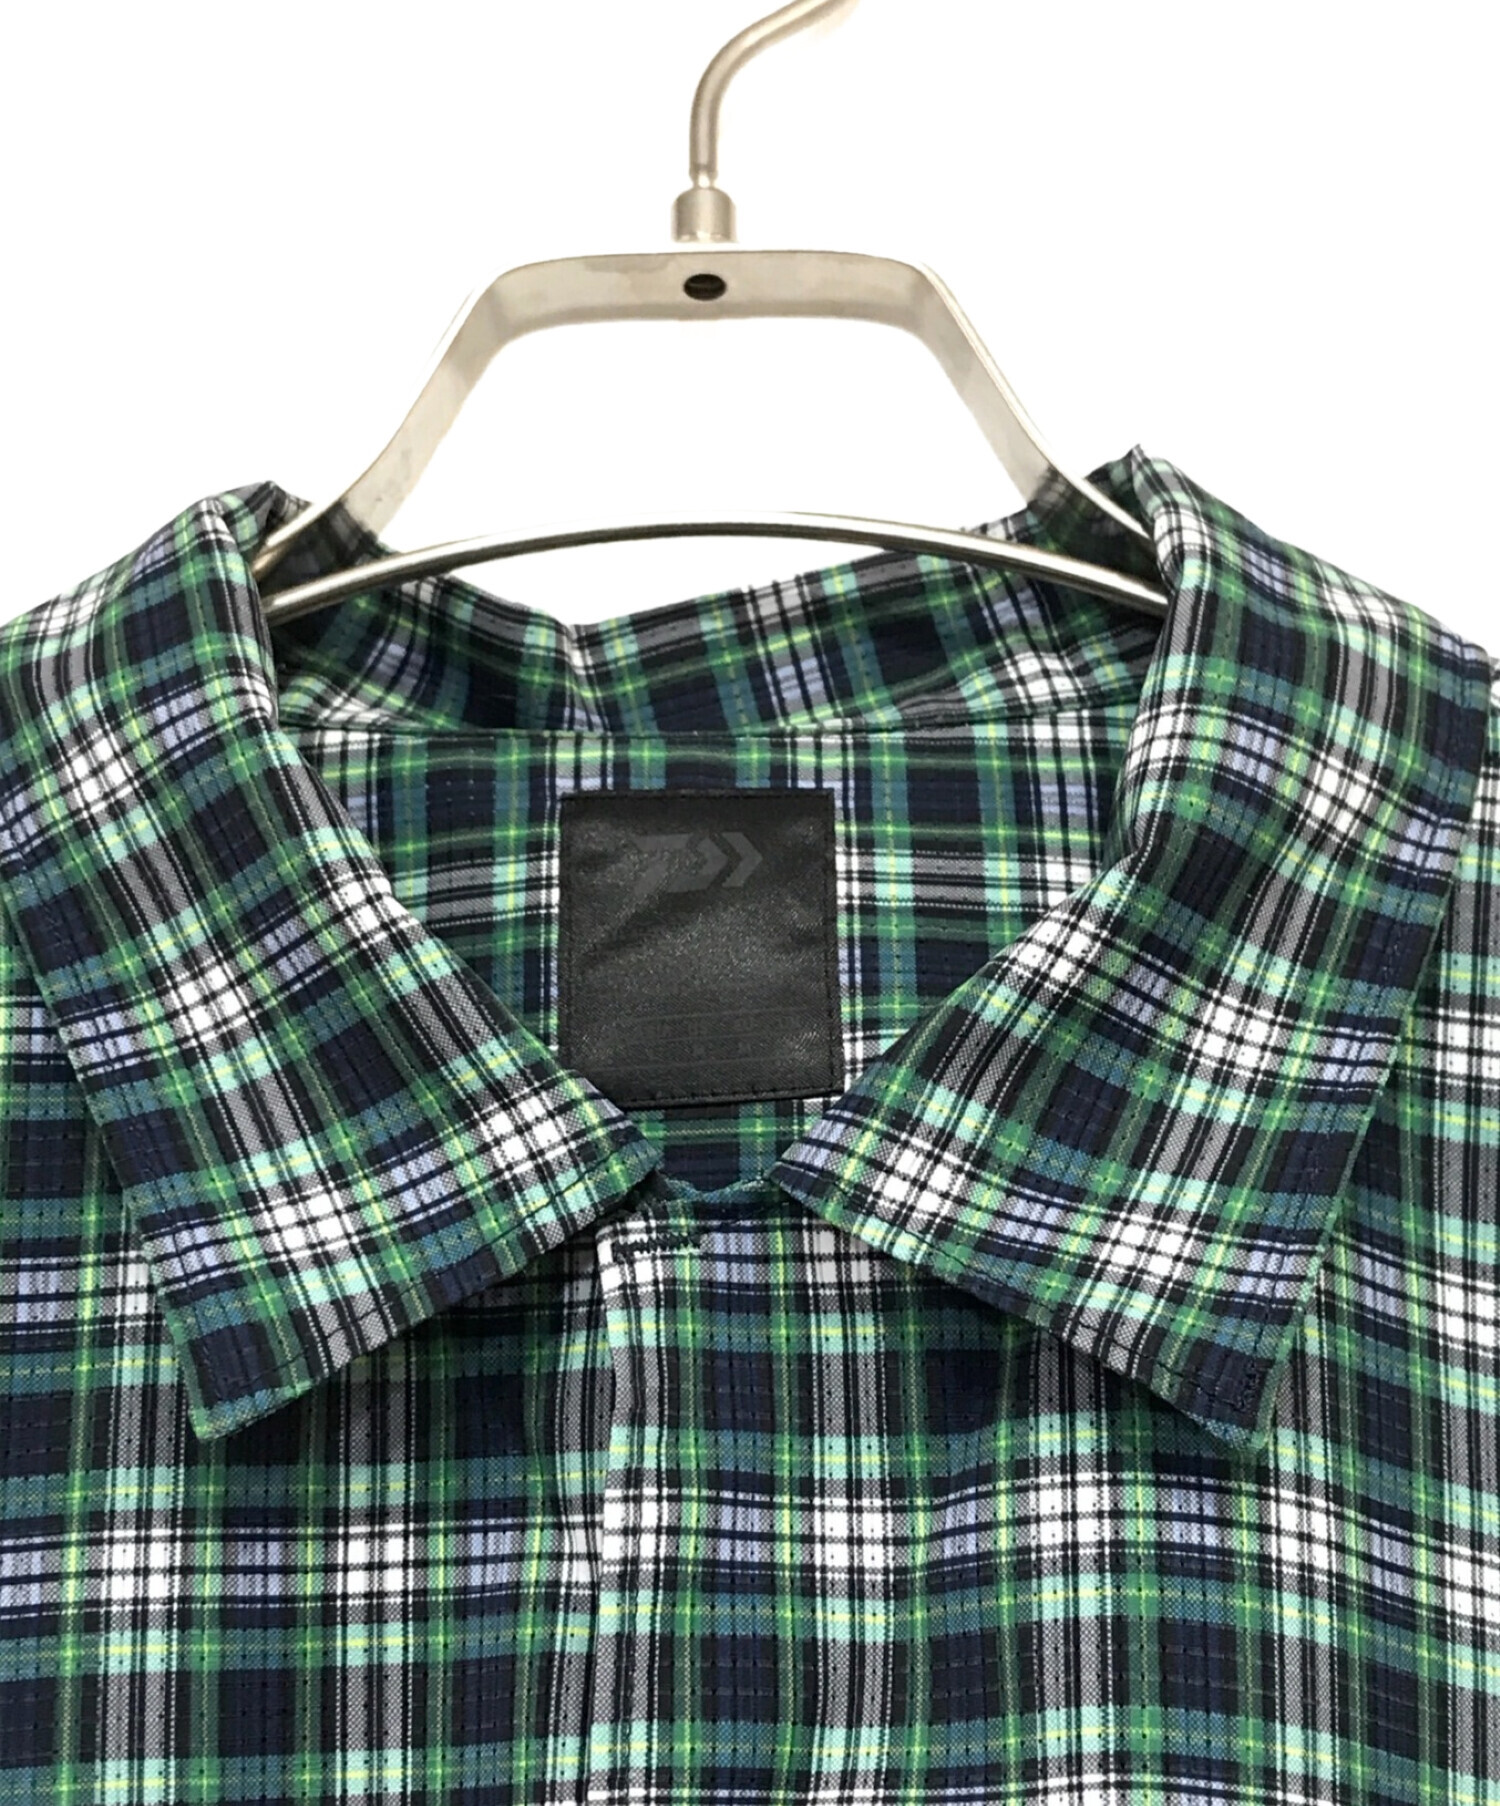 DAIWA PIER39 (ダイワ ピア39) Tech New Anglers Open Collar Shirts L/S 長袖シャツ  グリーン×ネイビー サイズ:SIZE L